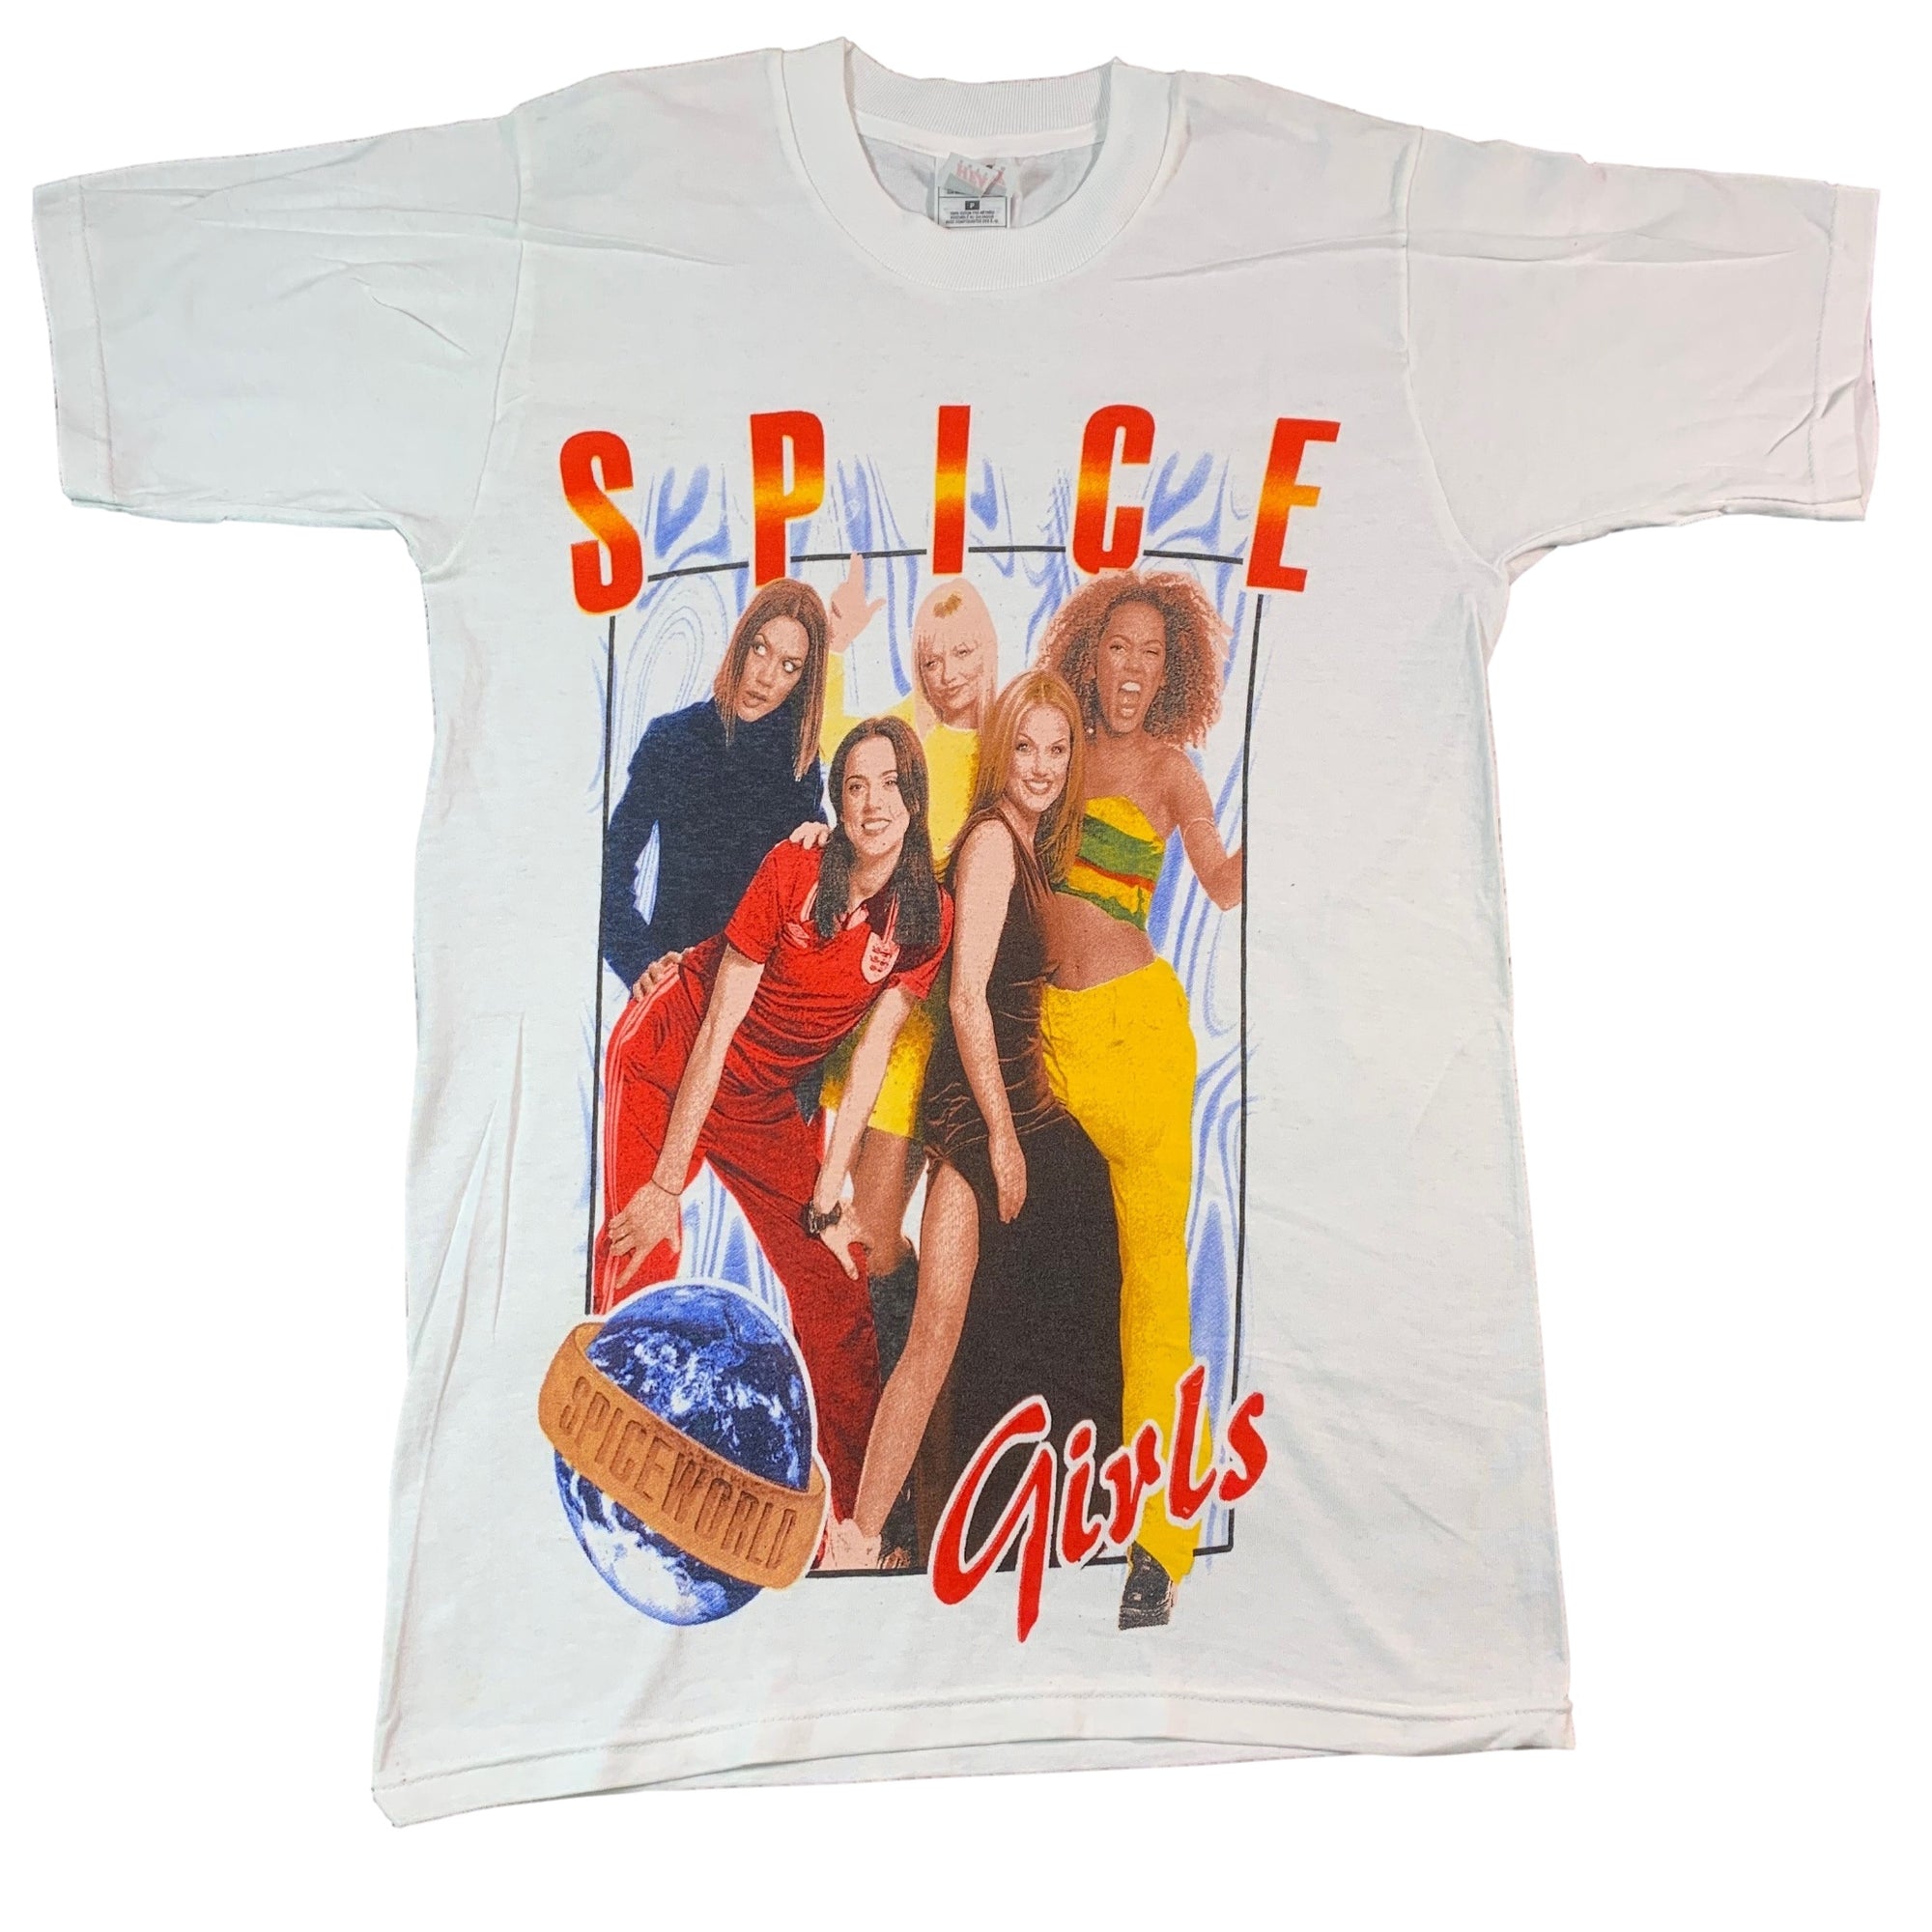 Vintage Spice Girls "Spice World" T-Shirt - jointcustodydc